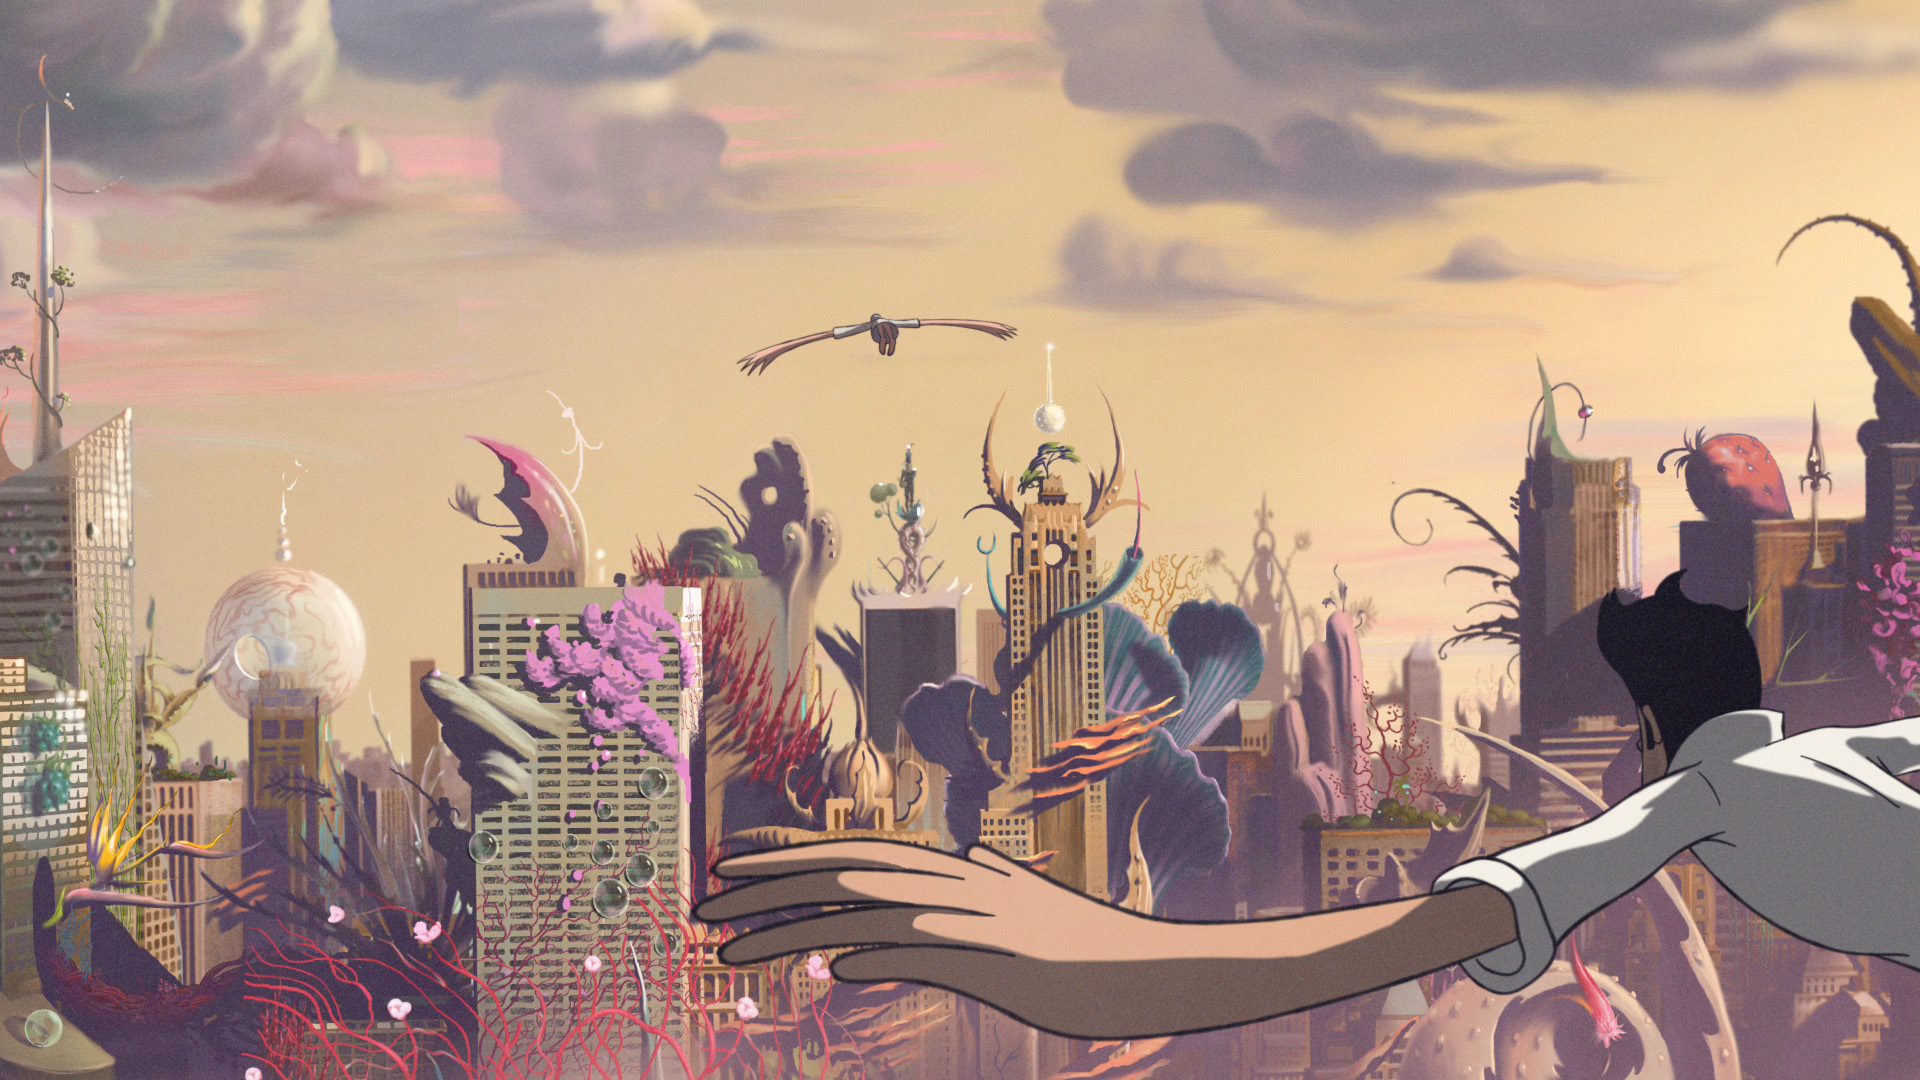 the-congress-animated-city.jpg